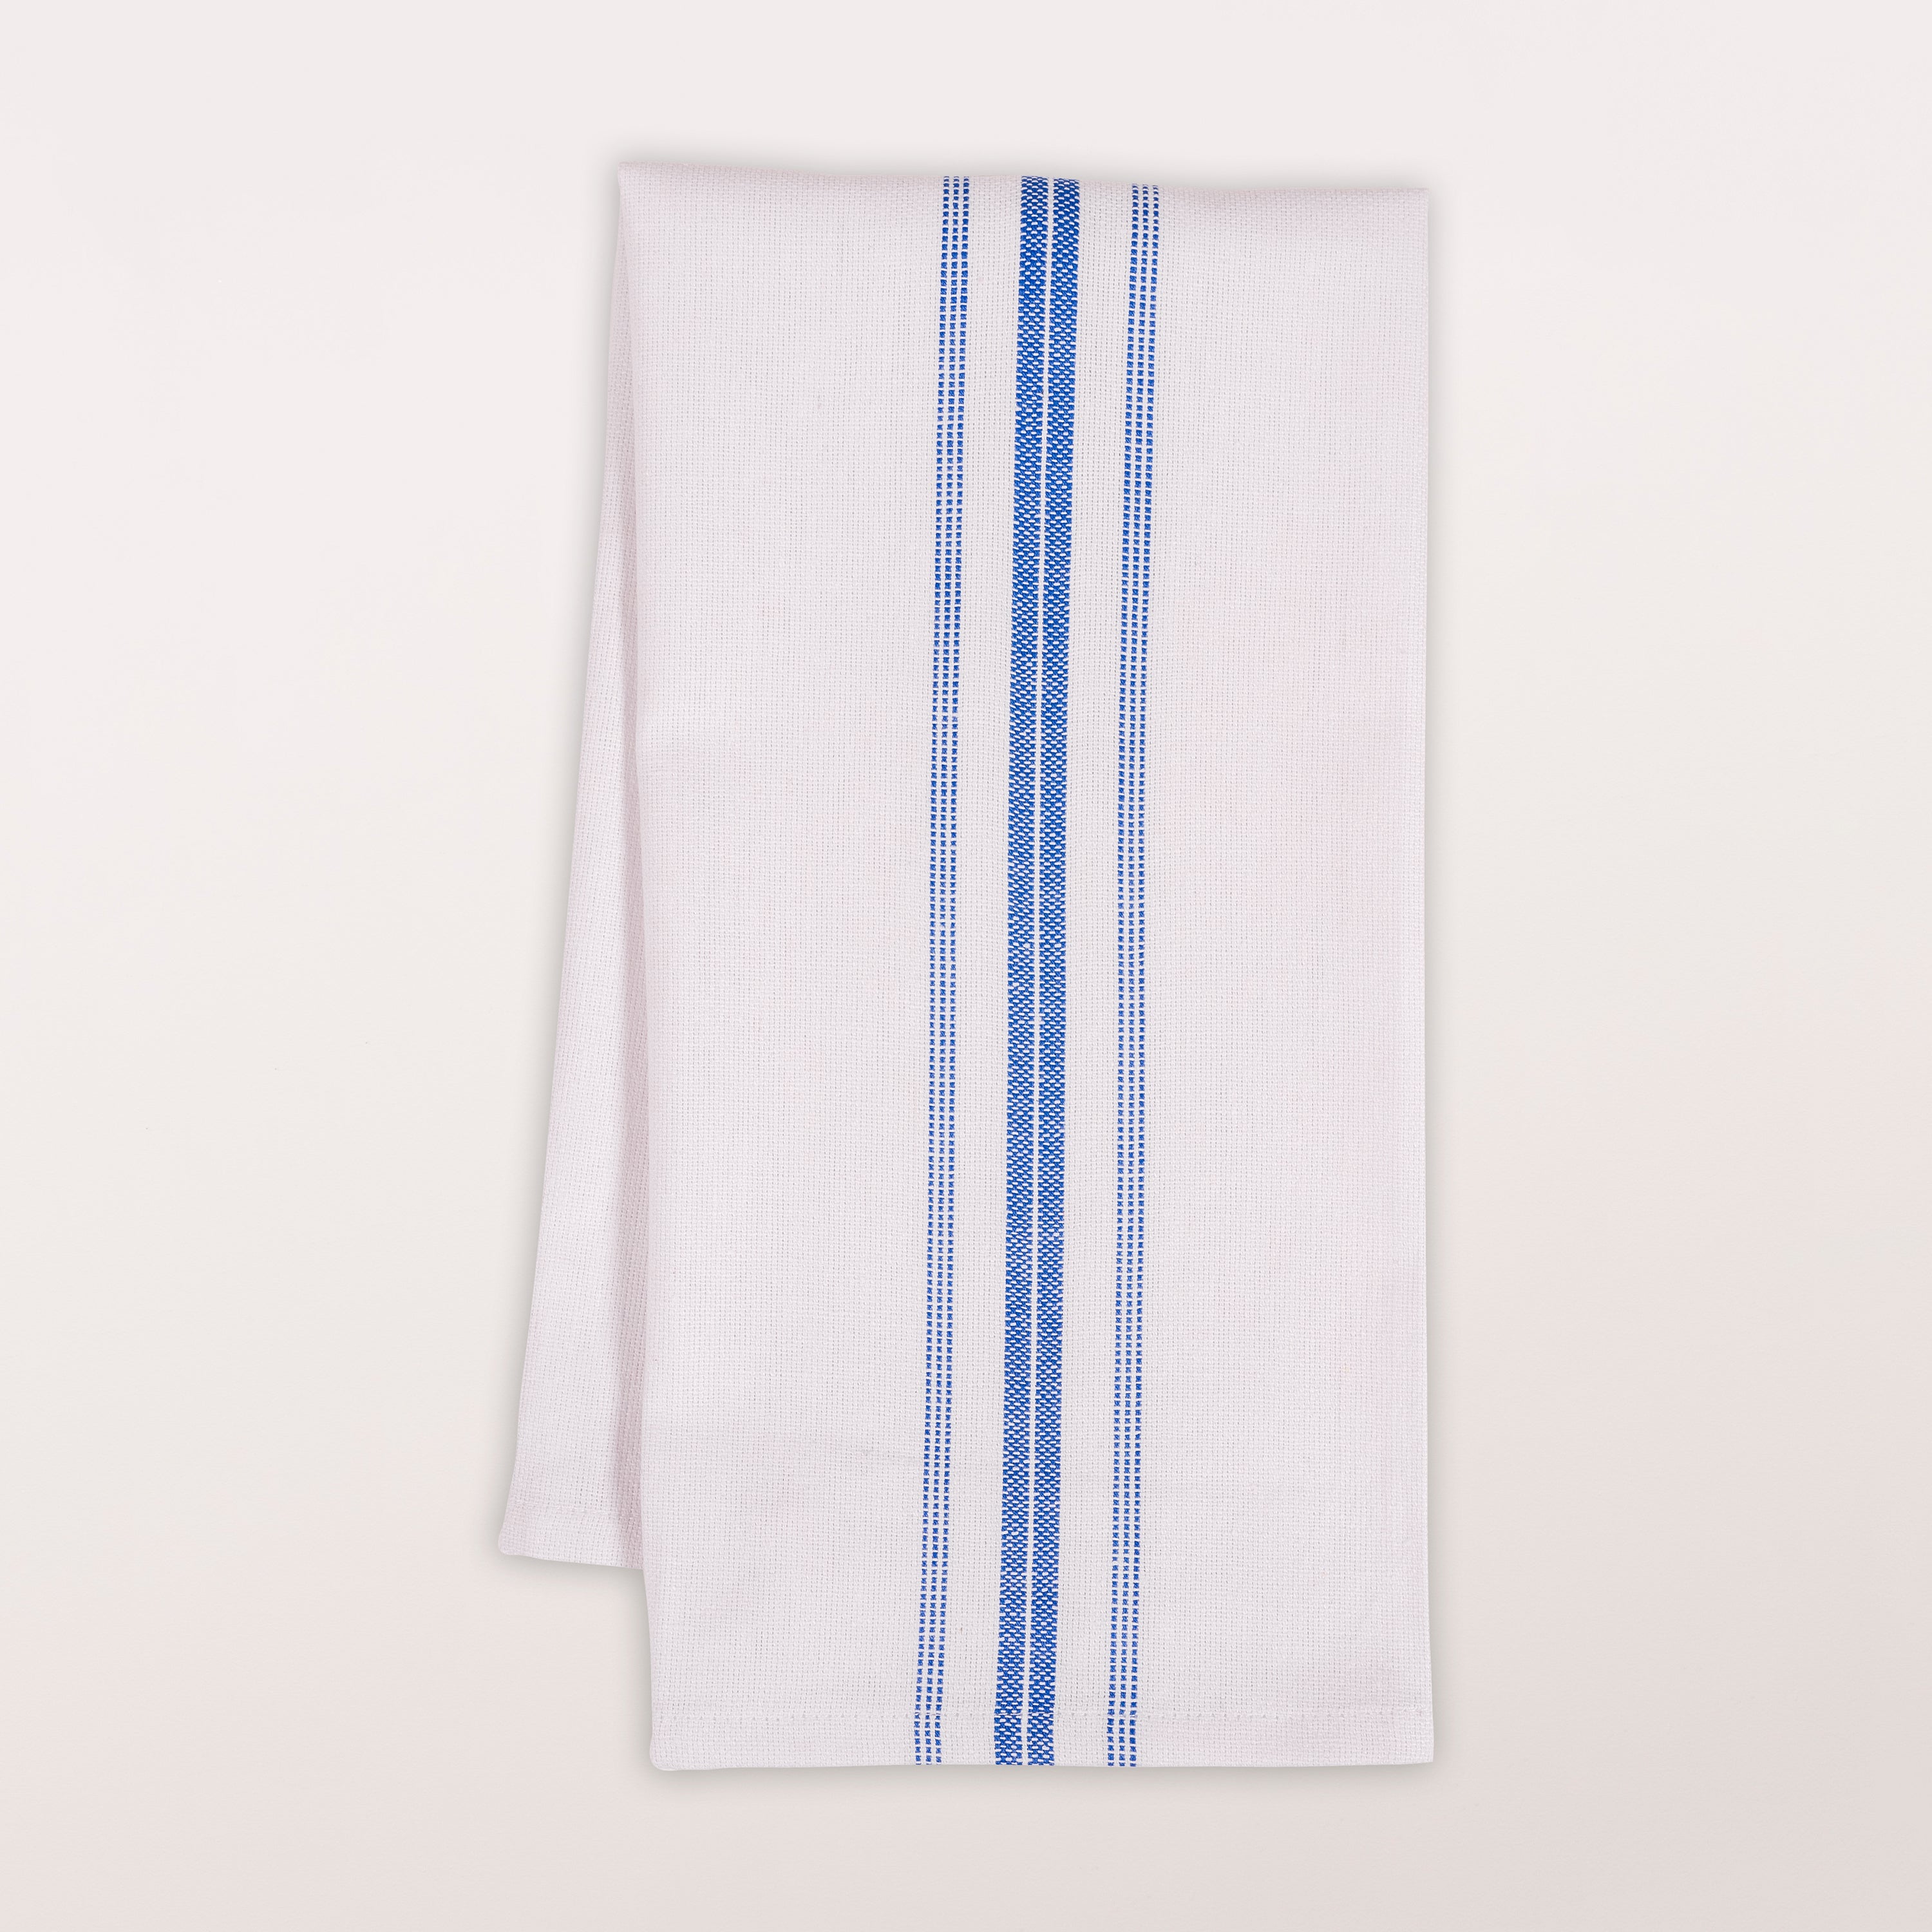 Farmhouse Grainstripe Kitchen Towel Set/3 Farm Kitchen Linens Grey